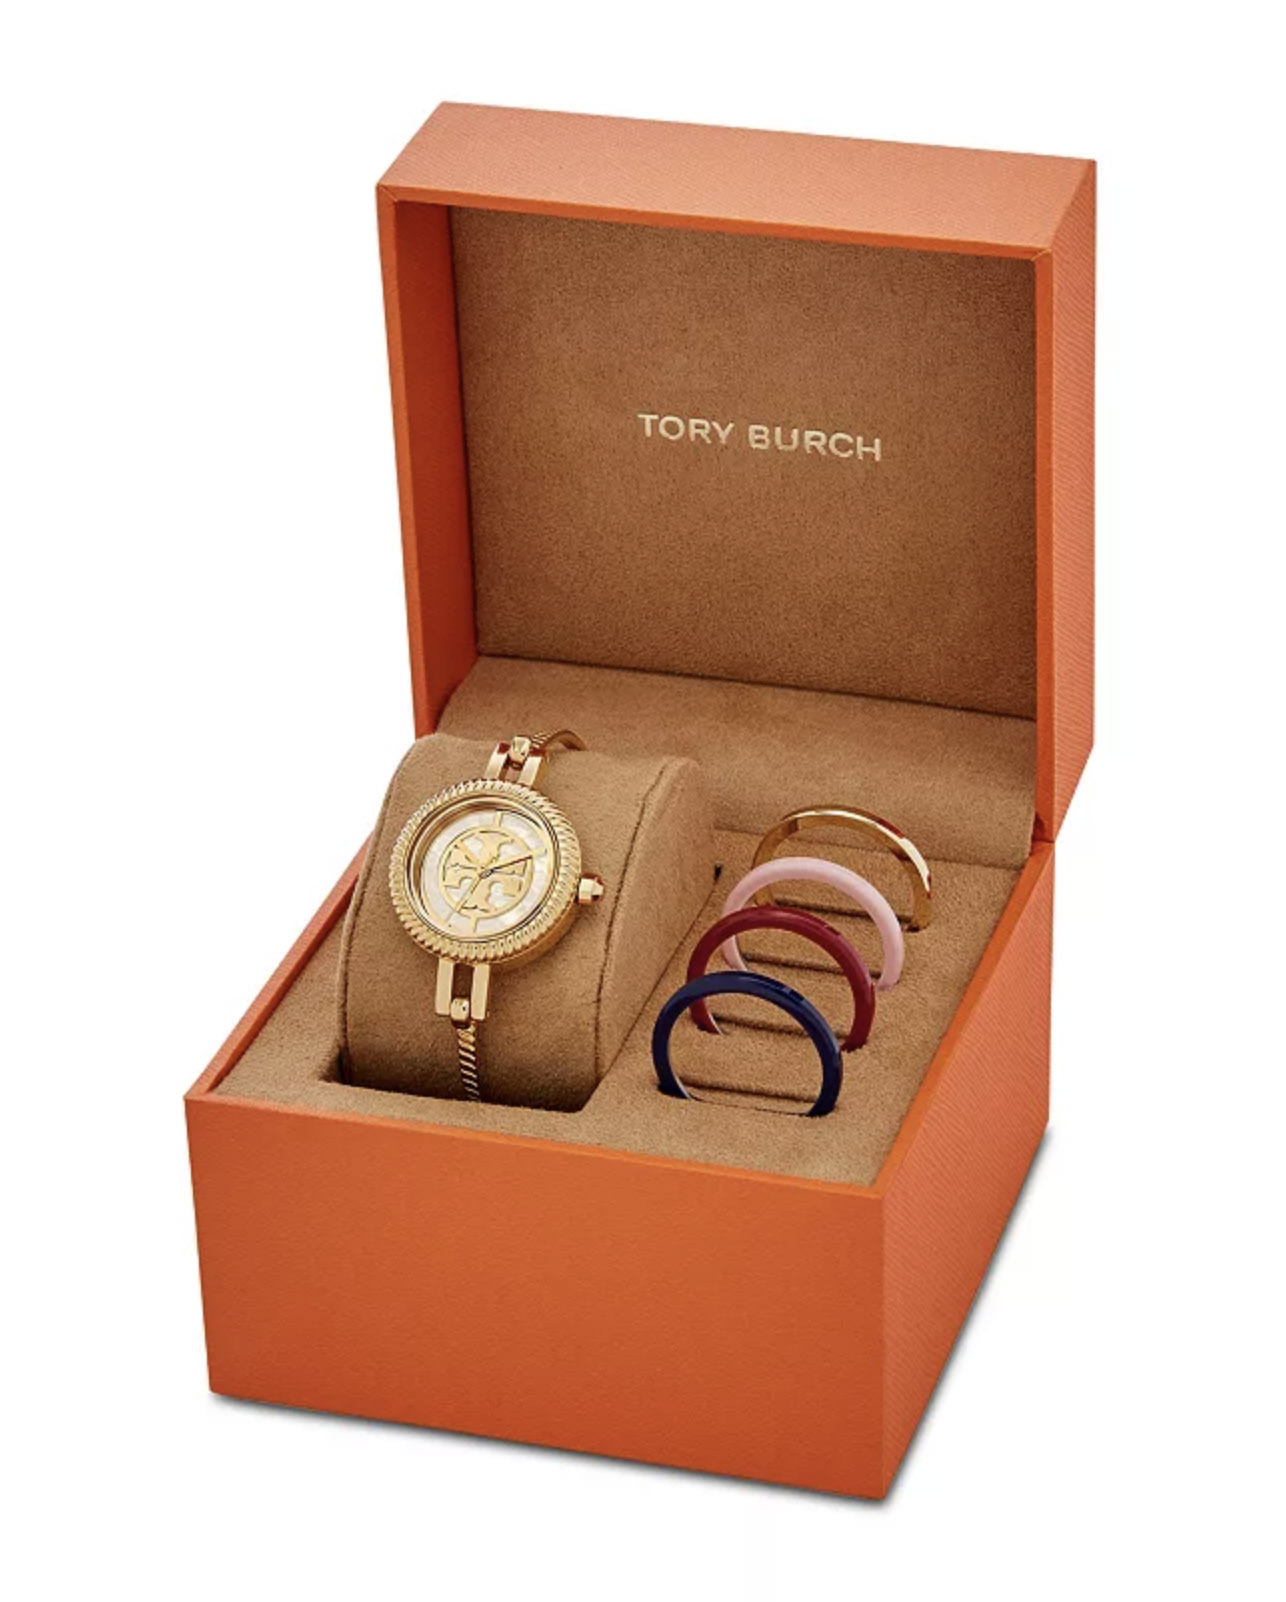 Tory Burch The Reva Bangle Bracelet Watch Gift Set